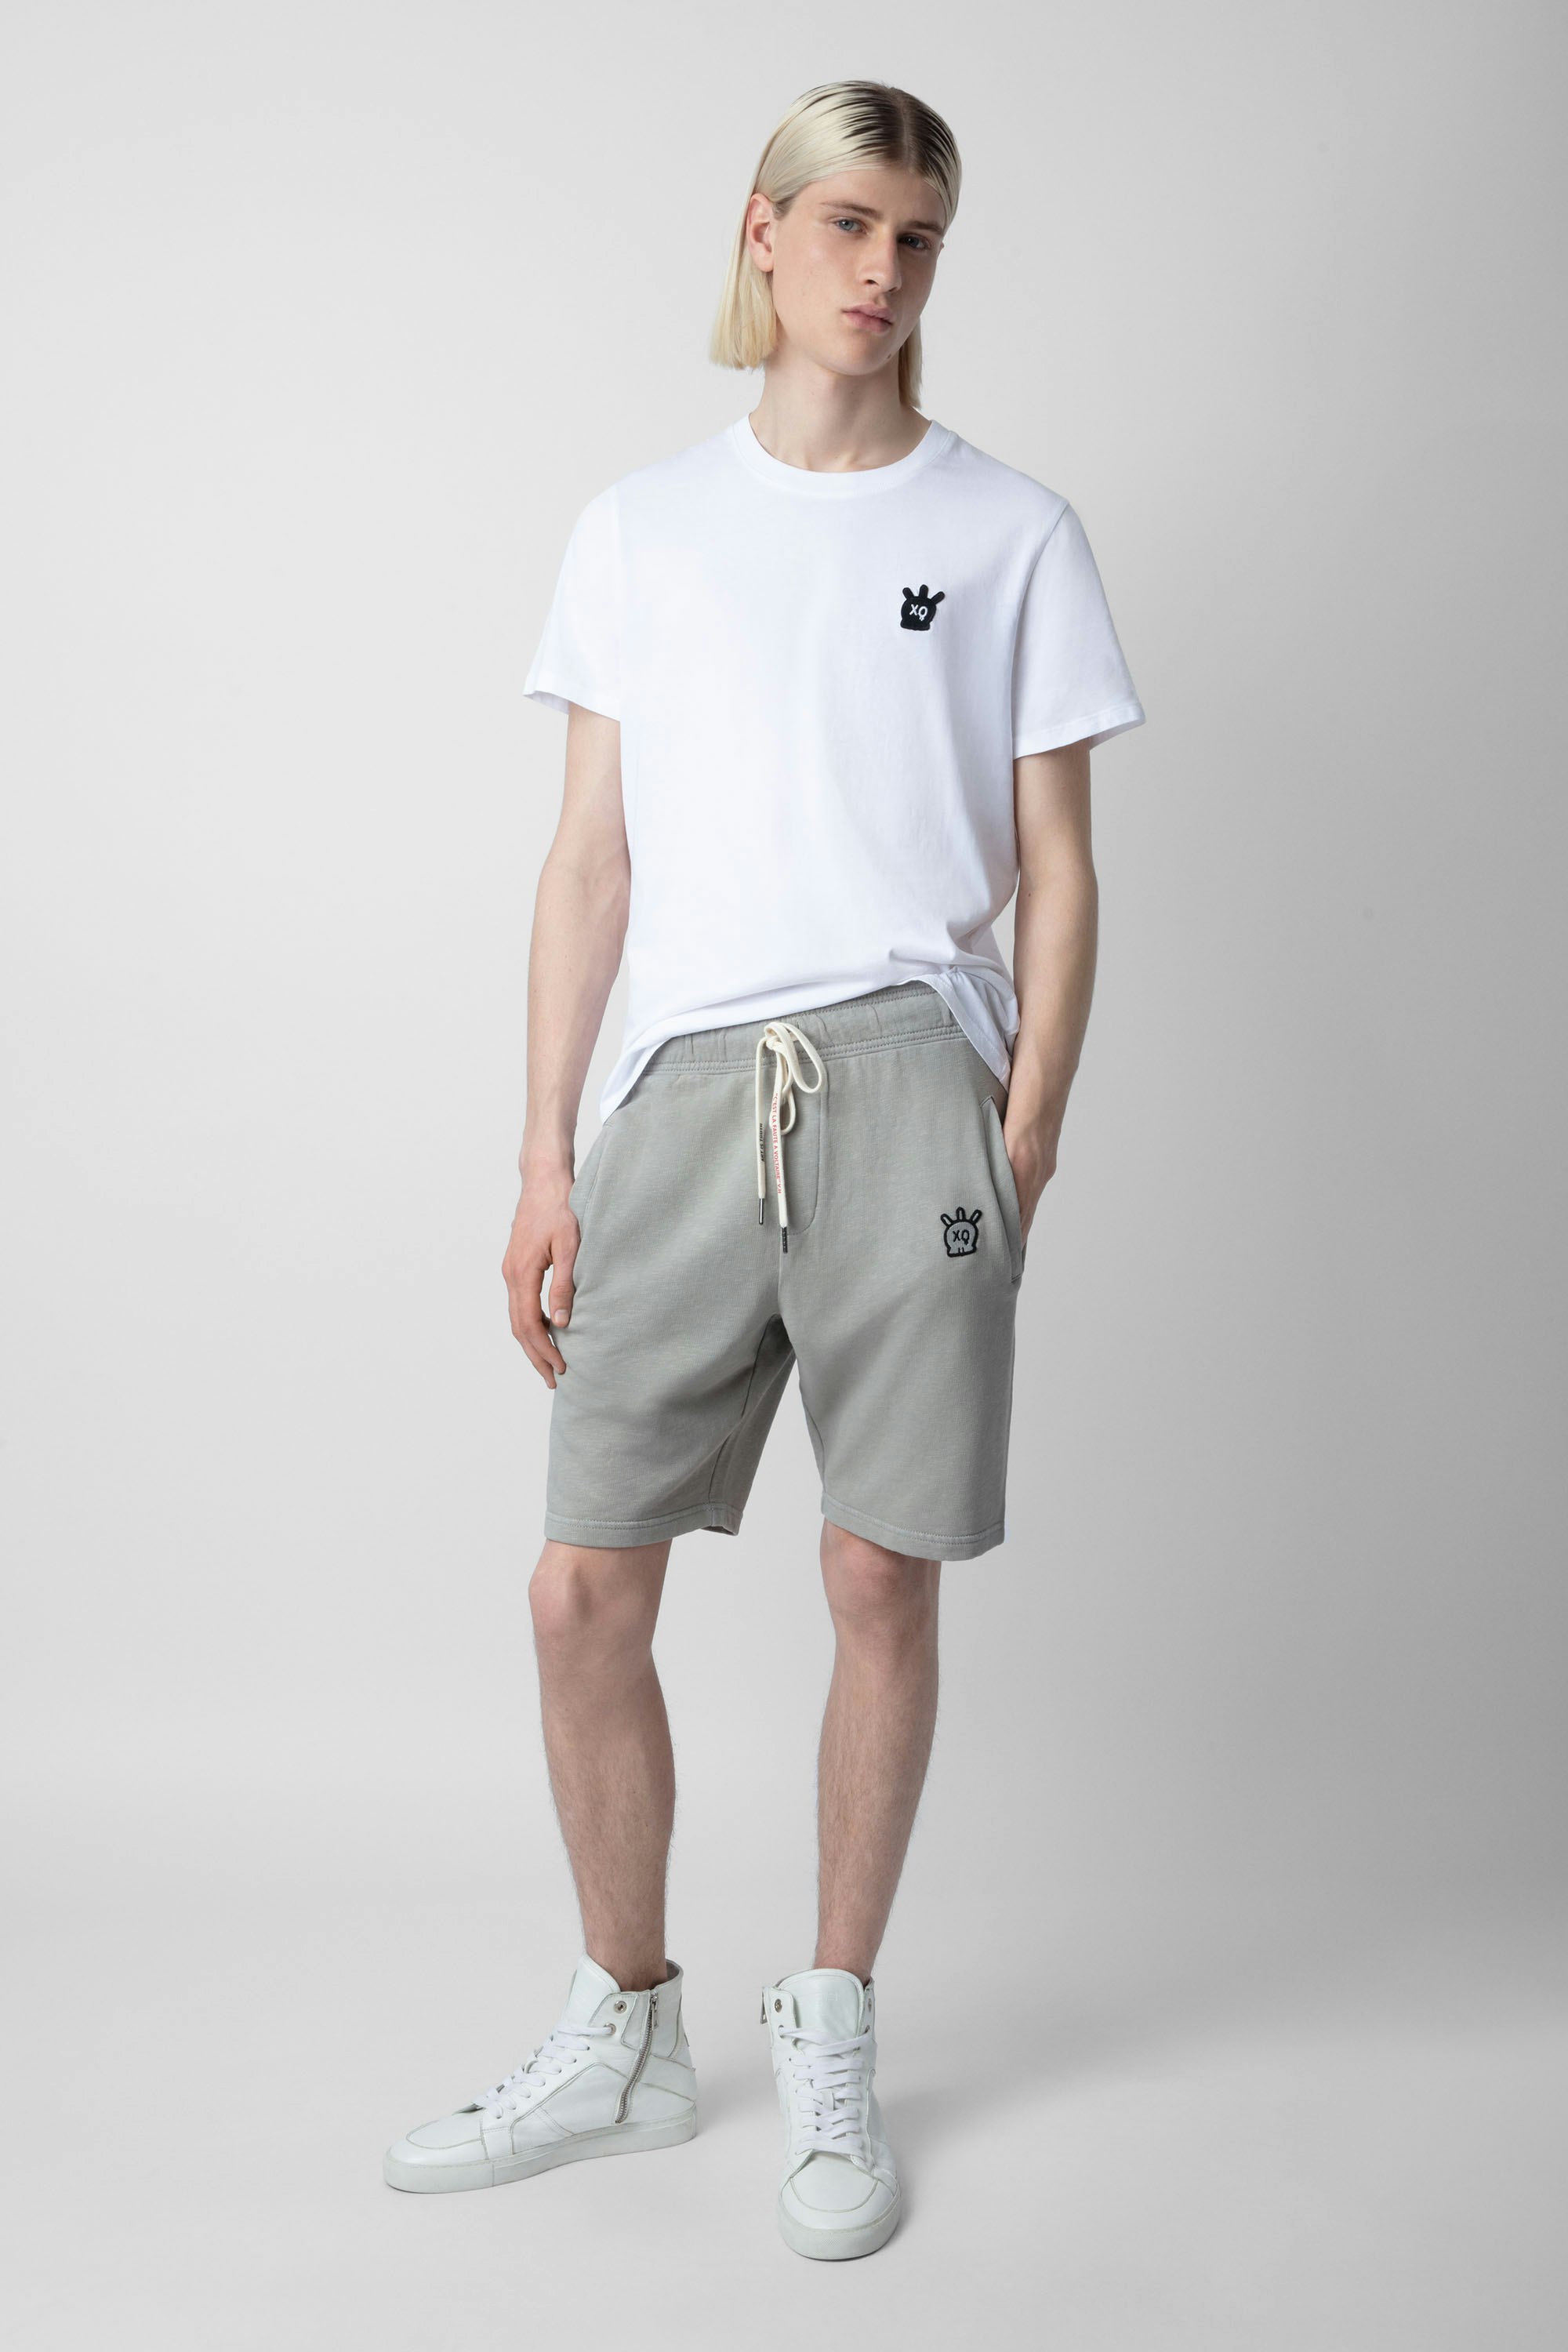 Party Skull Shorts - Men’s light grey cotton fleece shorts featuring a Skull XO patch.